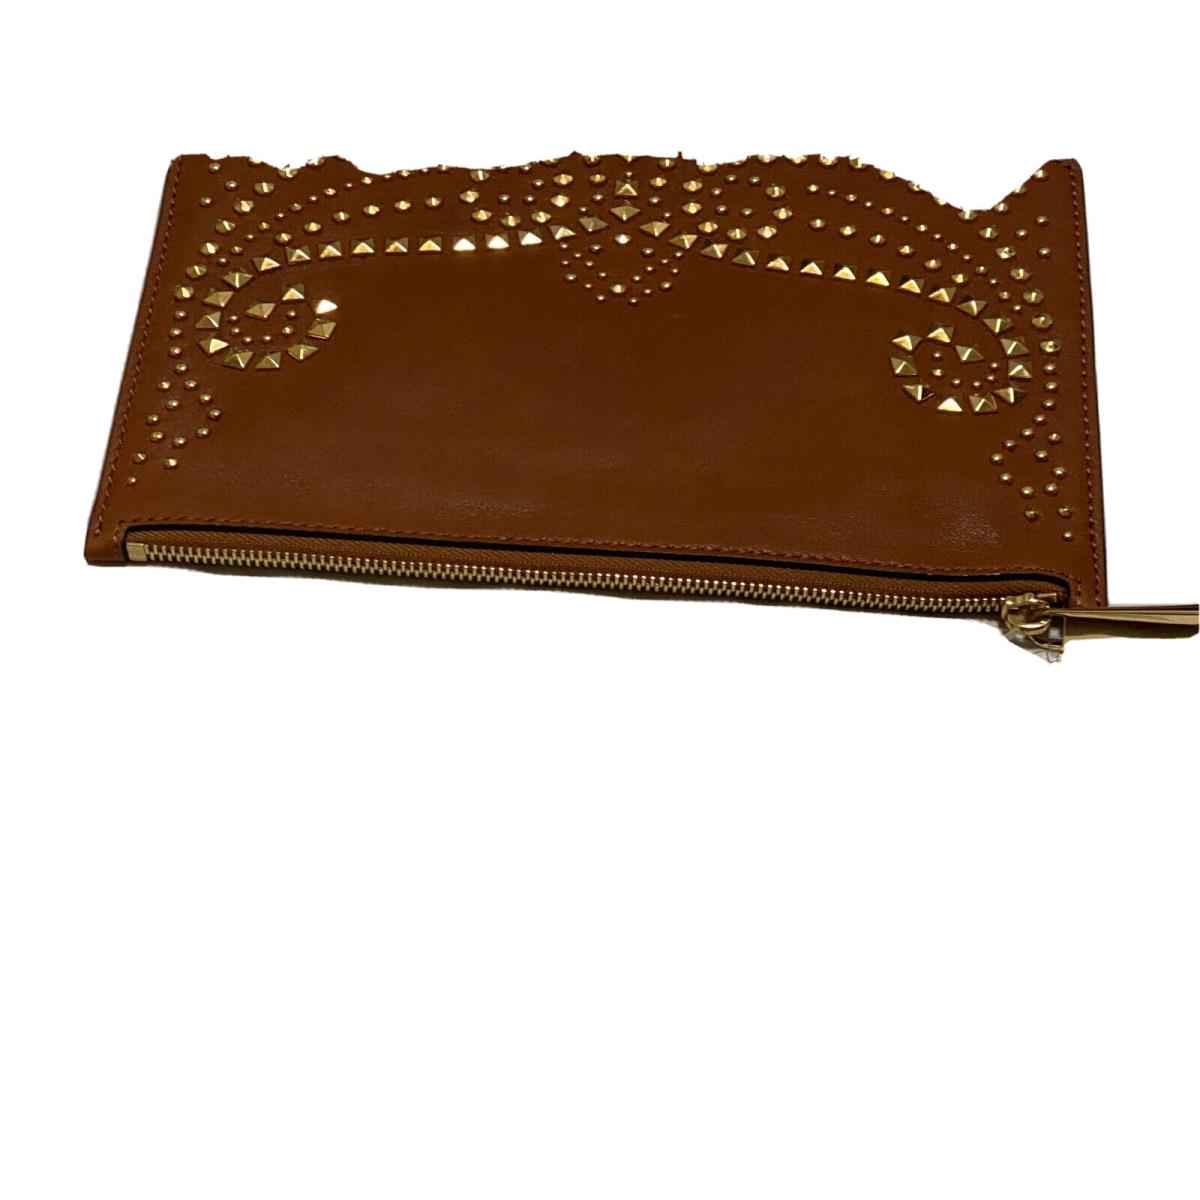 Michael Kors Rhea Luggage Brown Lamb Leather Studded Wristlet Clutch